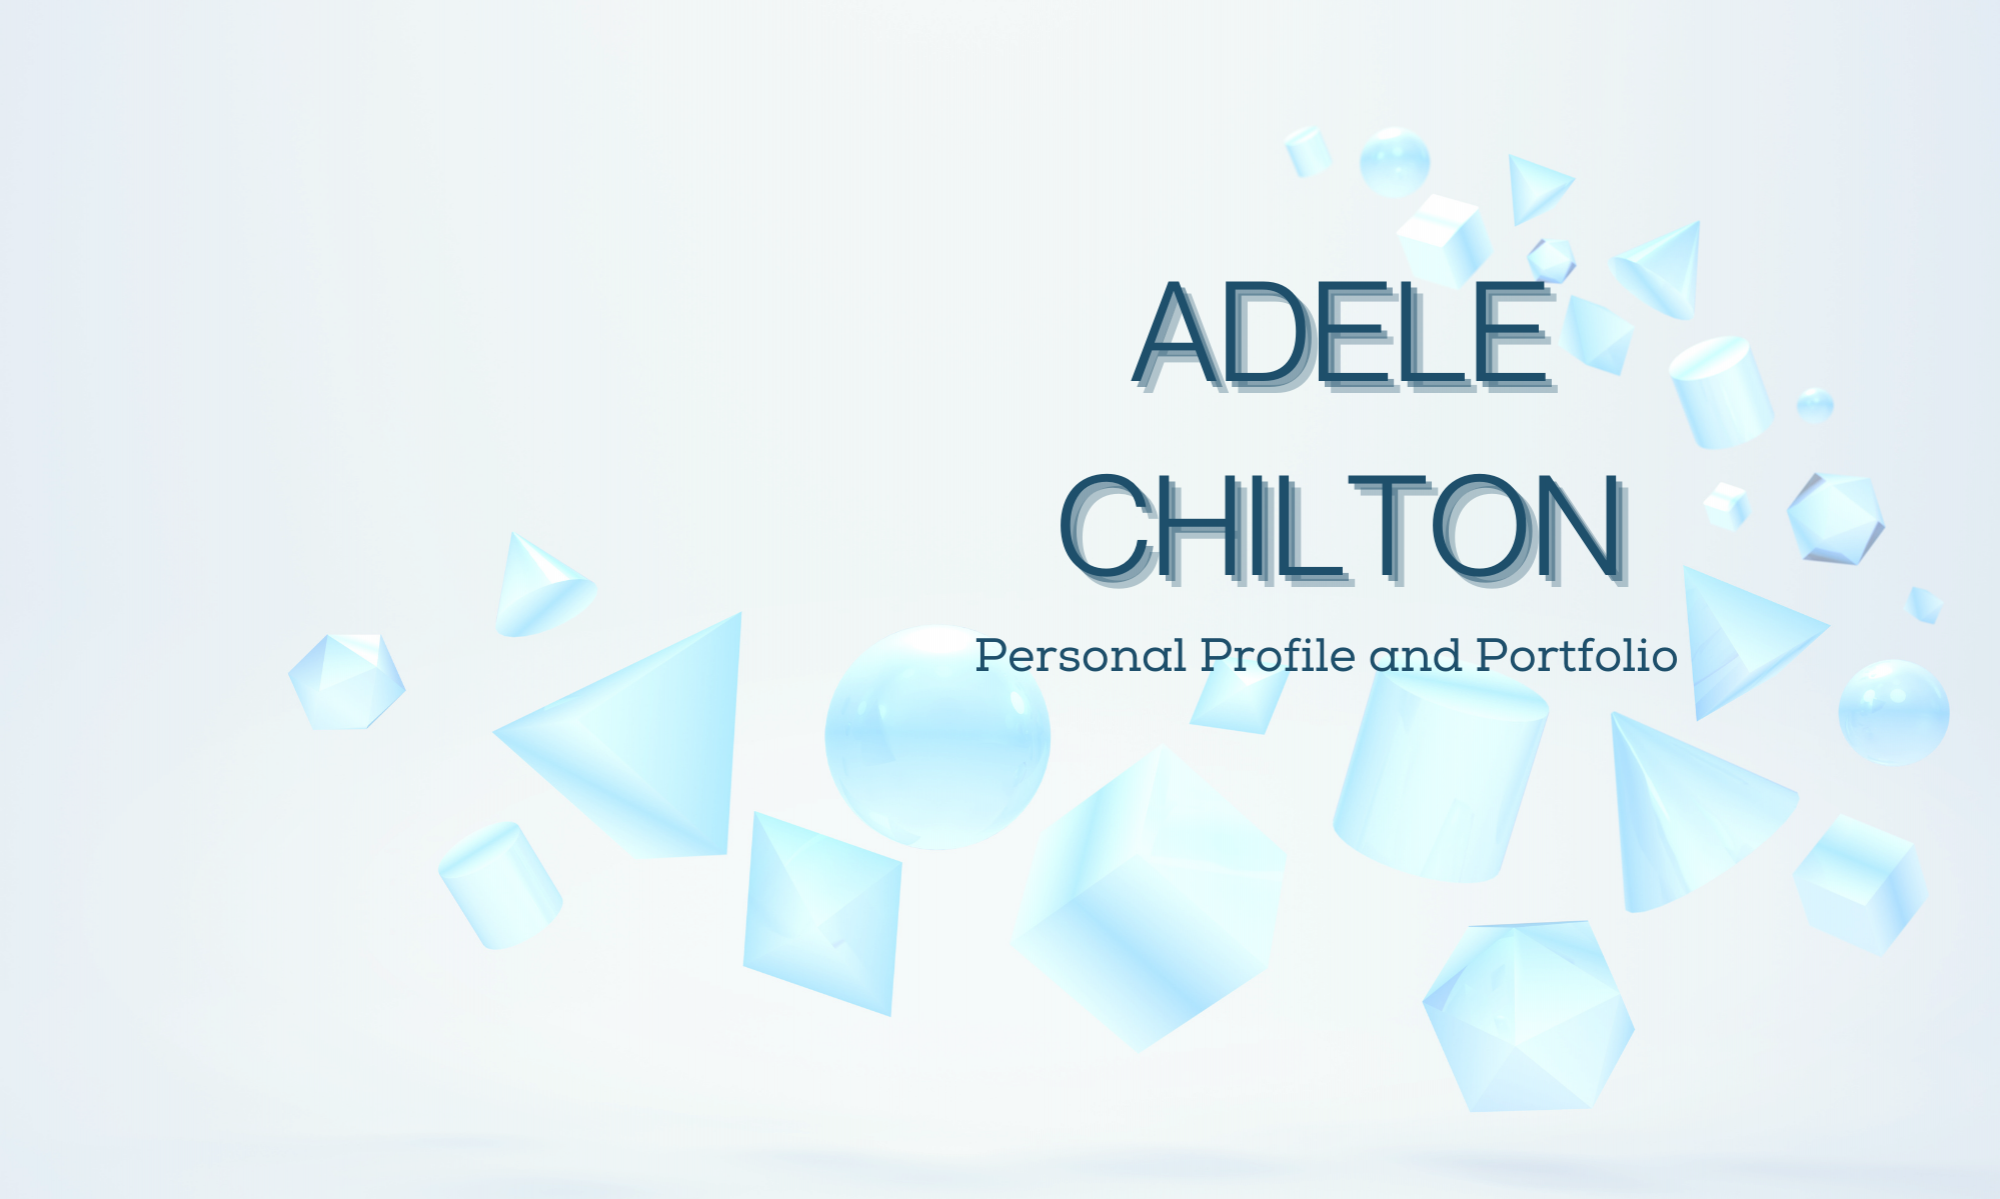 Adele Chilton